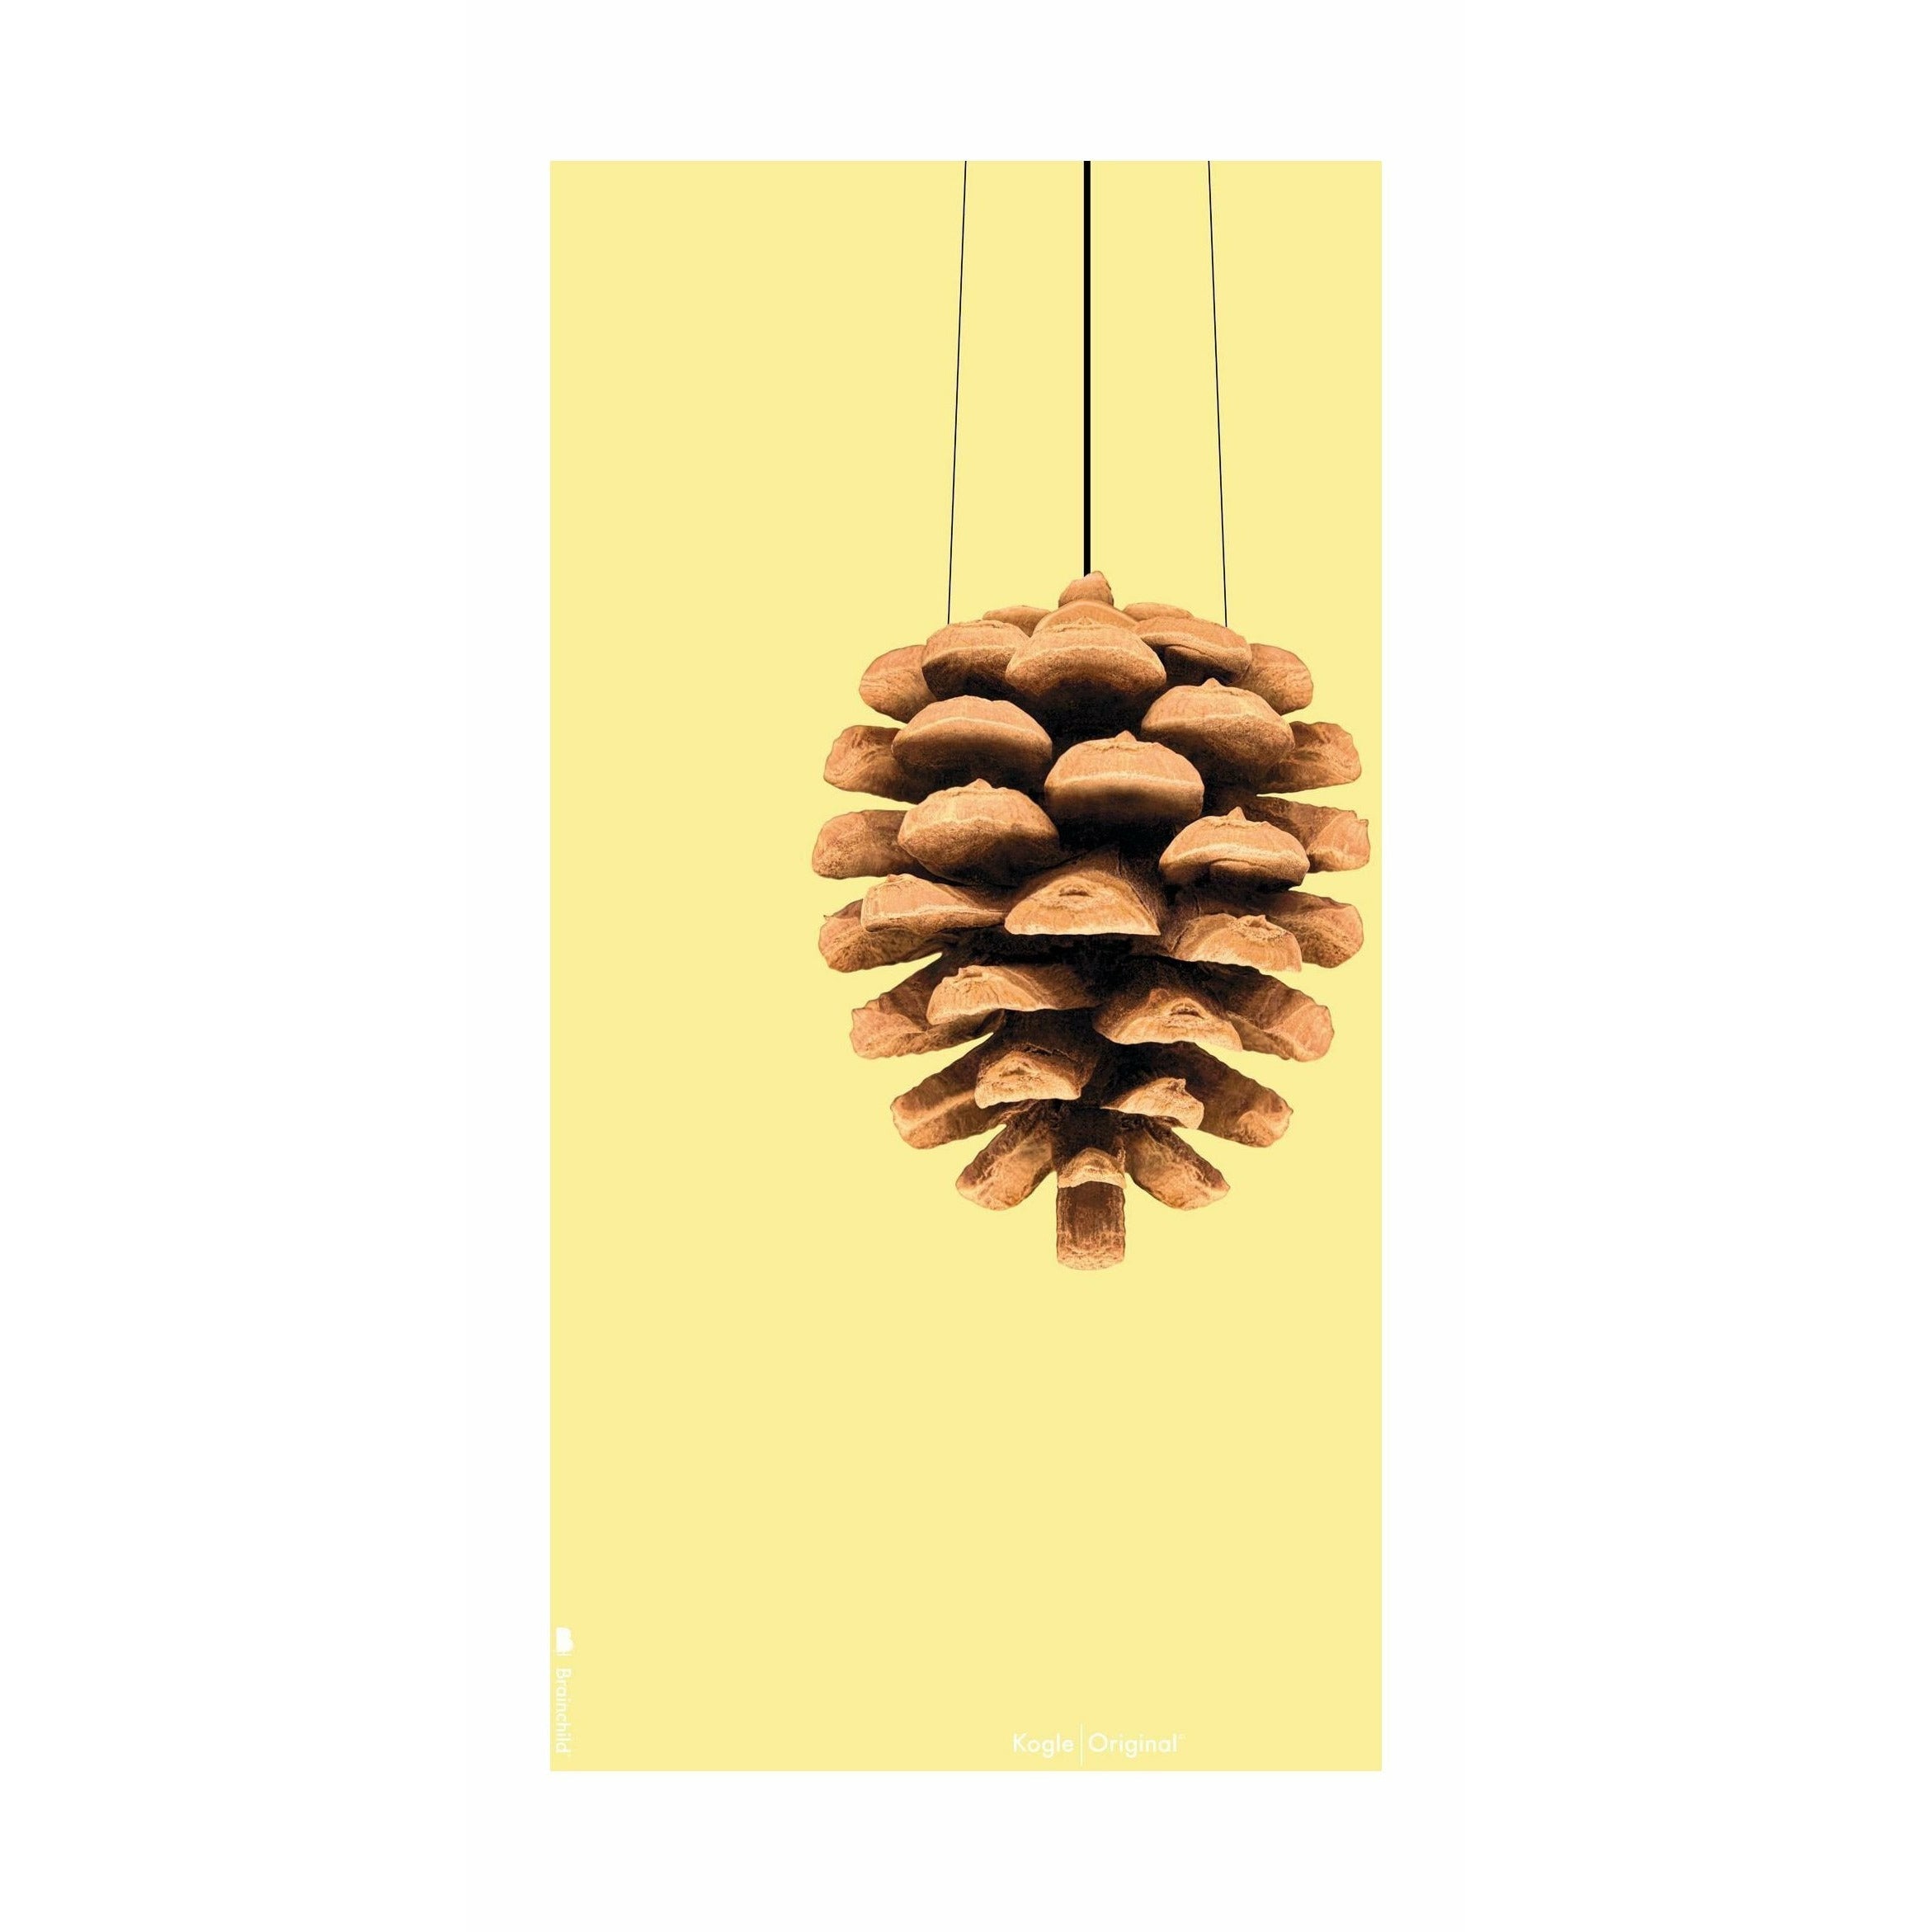 brainchild Pine Cone Classic Poster uden ramme 50x70 cm, gul baggrund